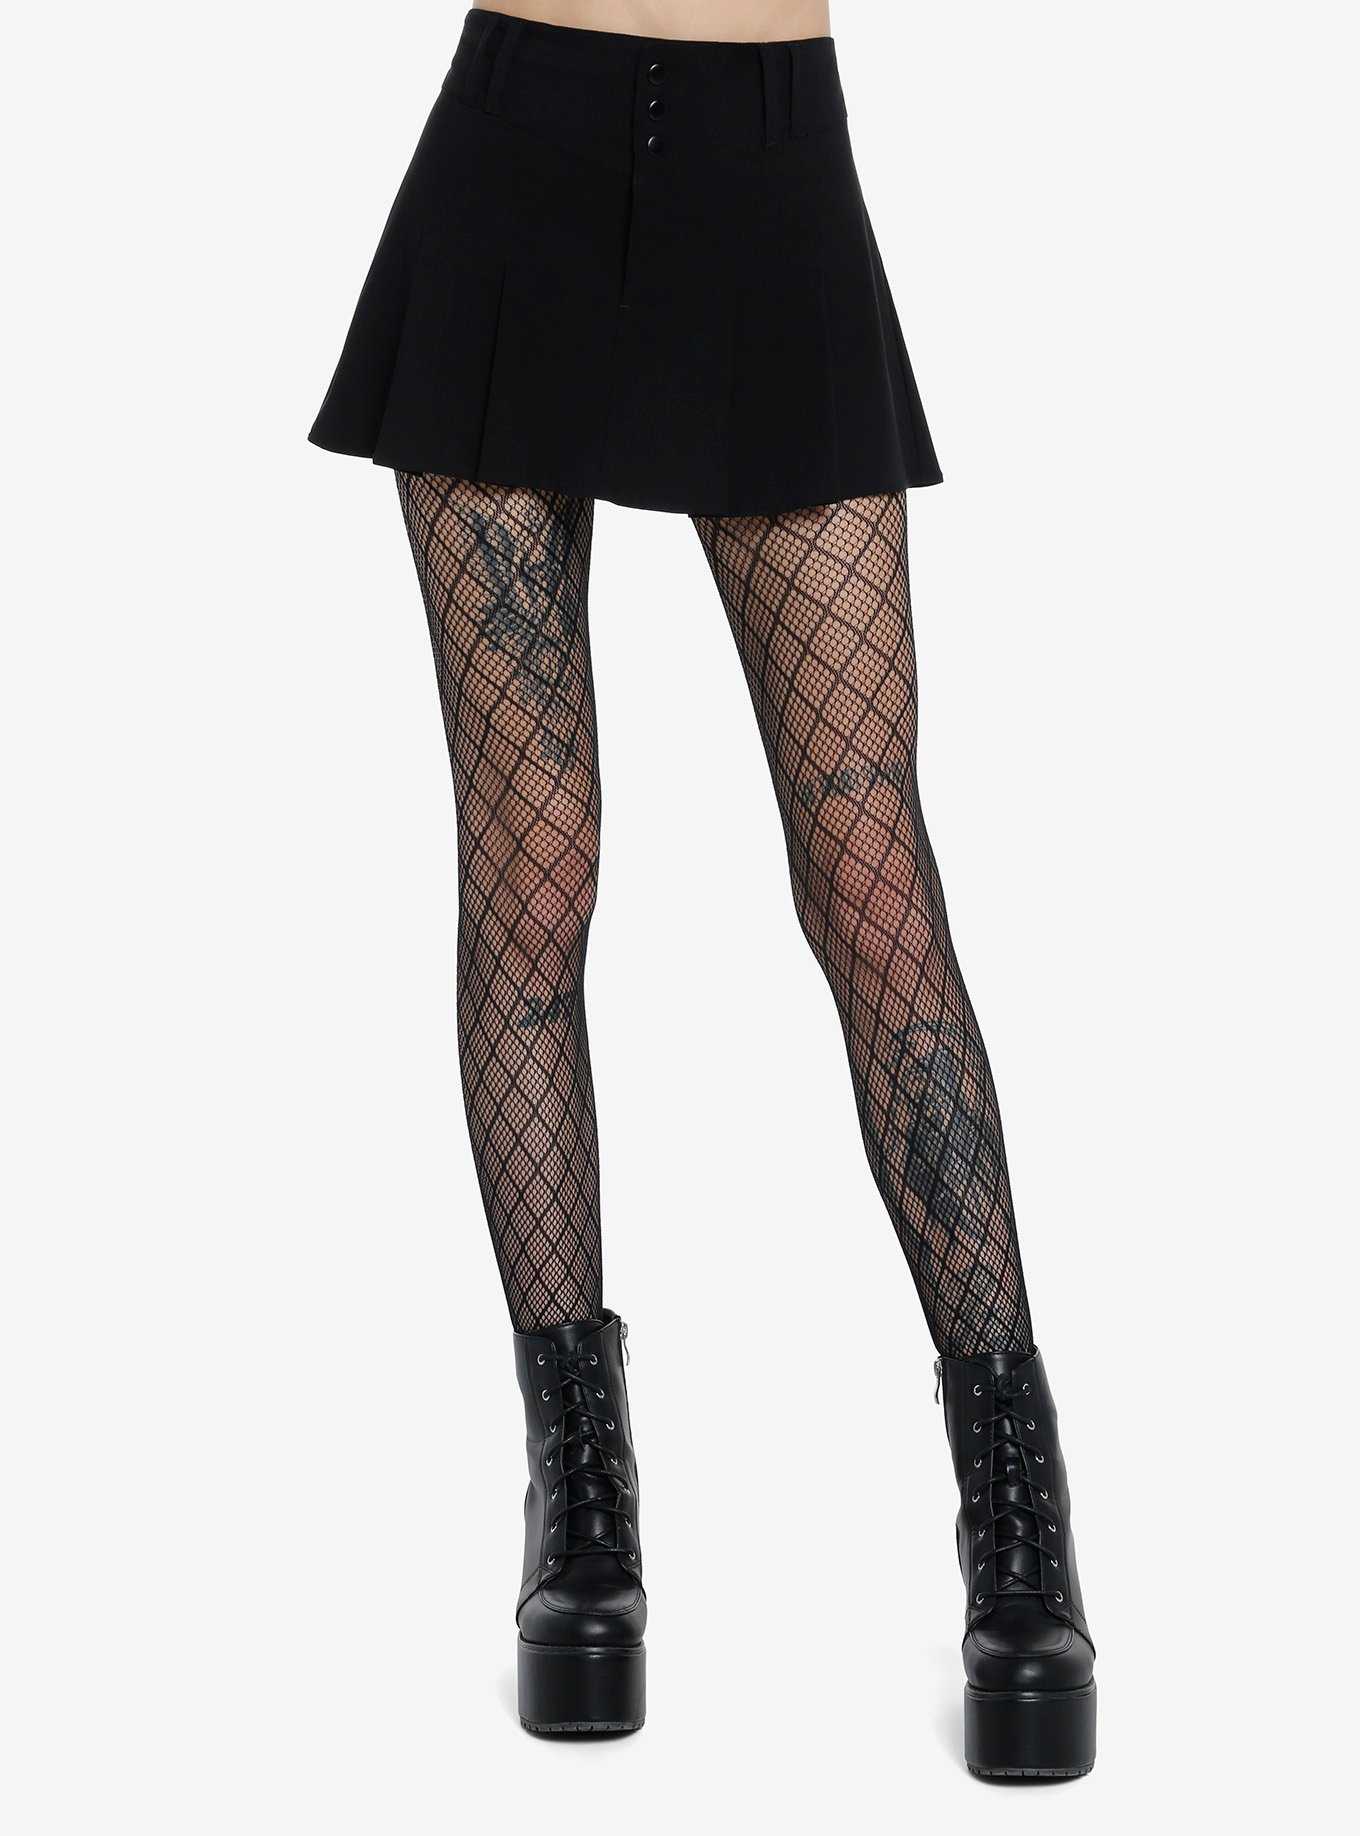 Girl Lolita Black Hello Kitty Stockings Sexy Fishnet Tights Knee Pantyhose